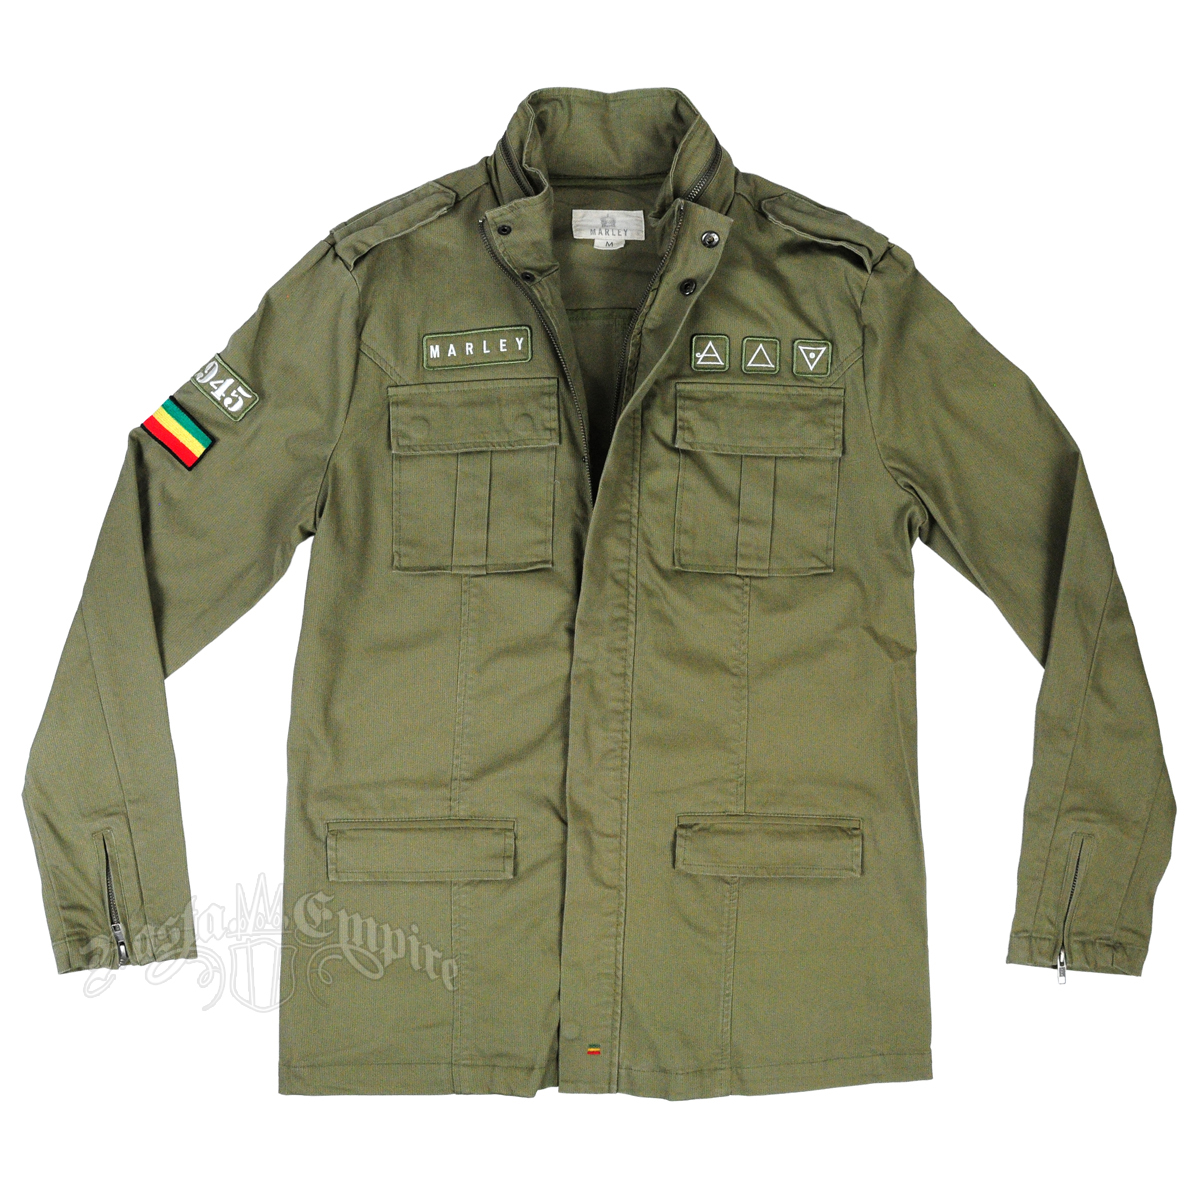 Marley Olive Green Military Jacket - Men's at RastaEmpire.com